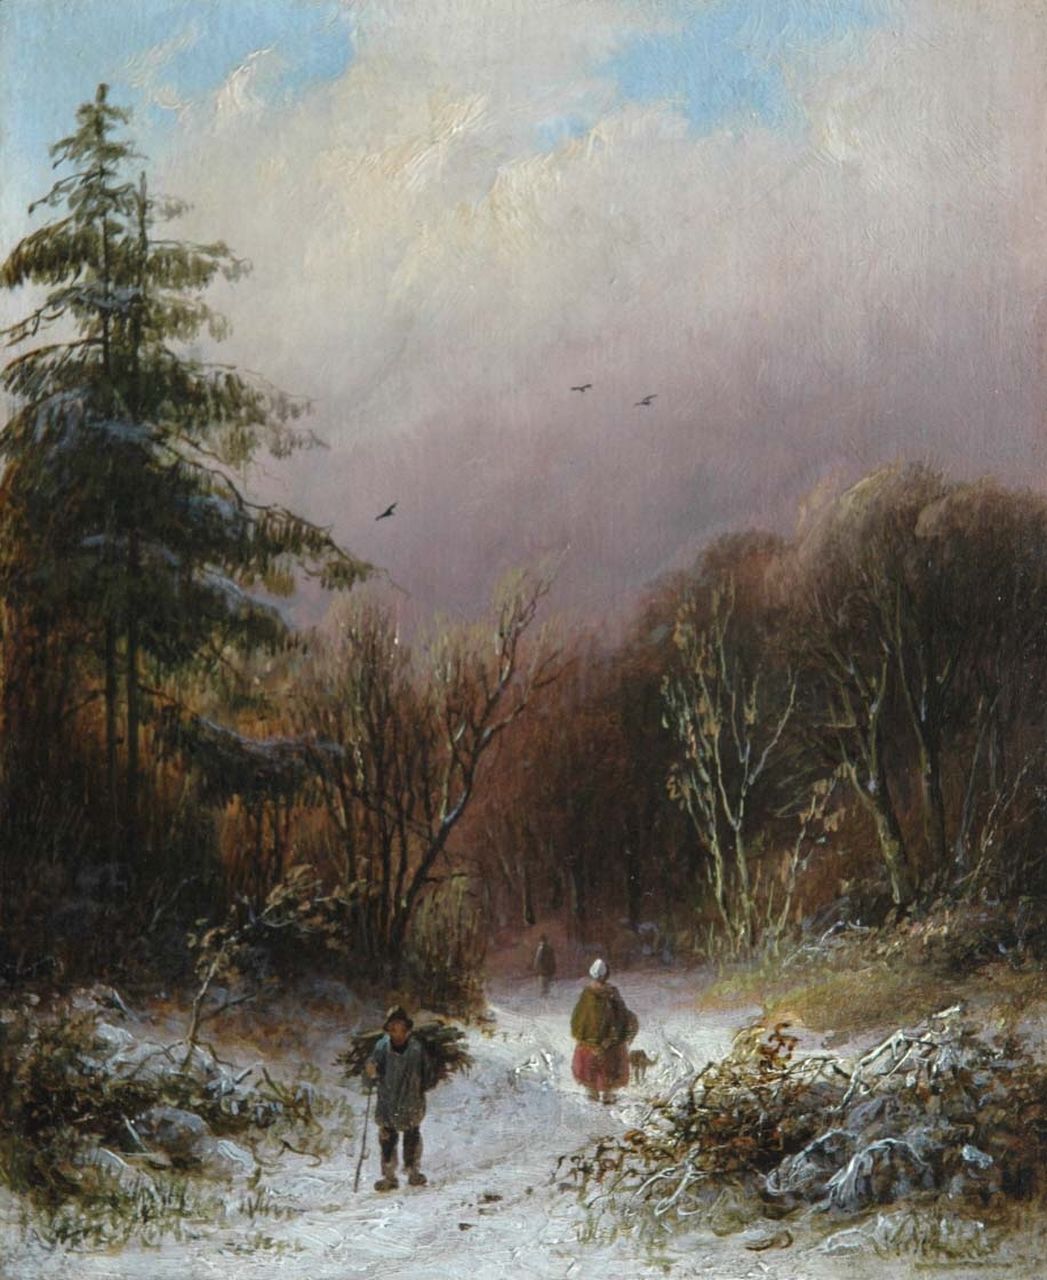 Daiwaille A.J.  | Alexander Joseph Daiwaille, A wood gatherer in a winter landscape, Öl auf Holz 16,3 x 13,4 cm